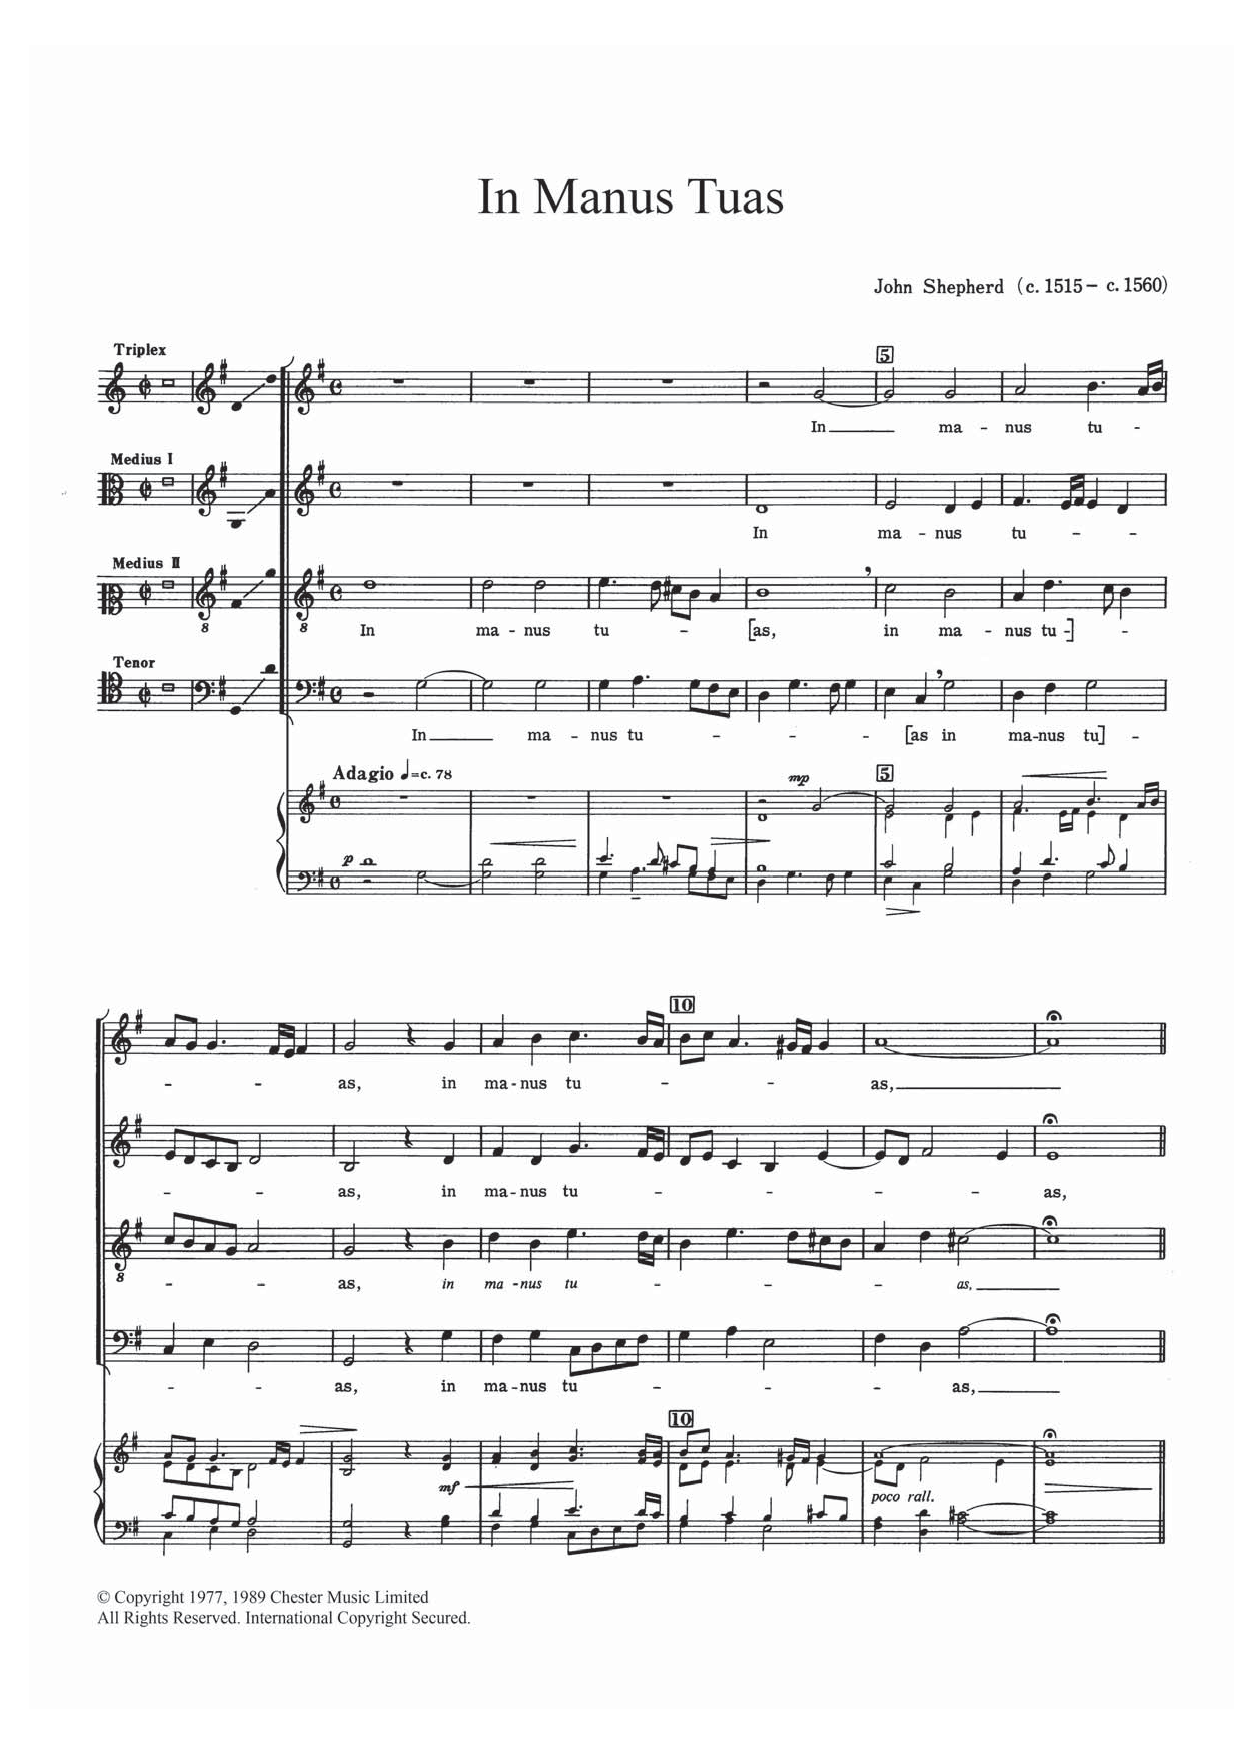 John Shepherd In Manus Tuas Sheet Music Notes & Chords for SATB - Download or Print PDF